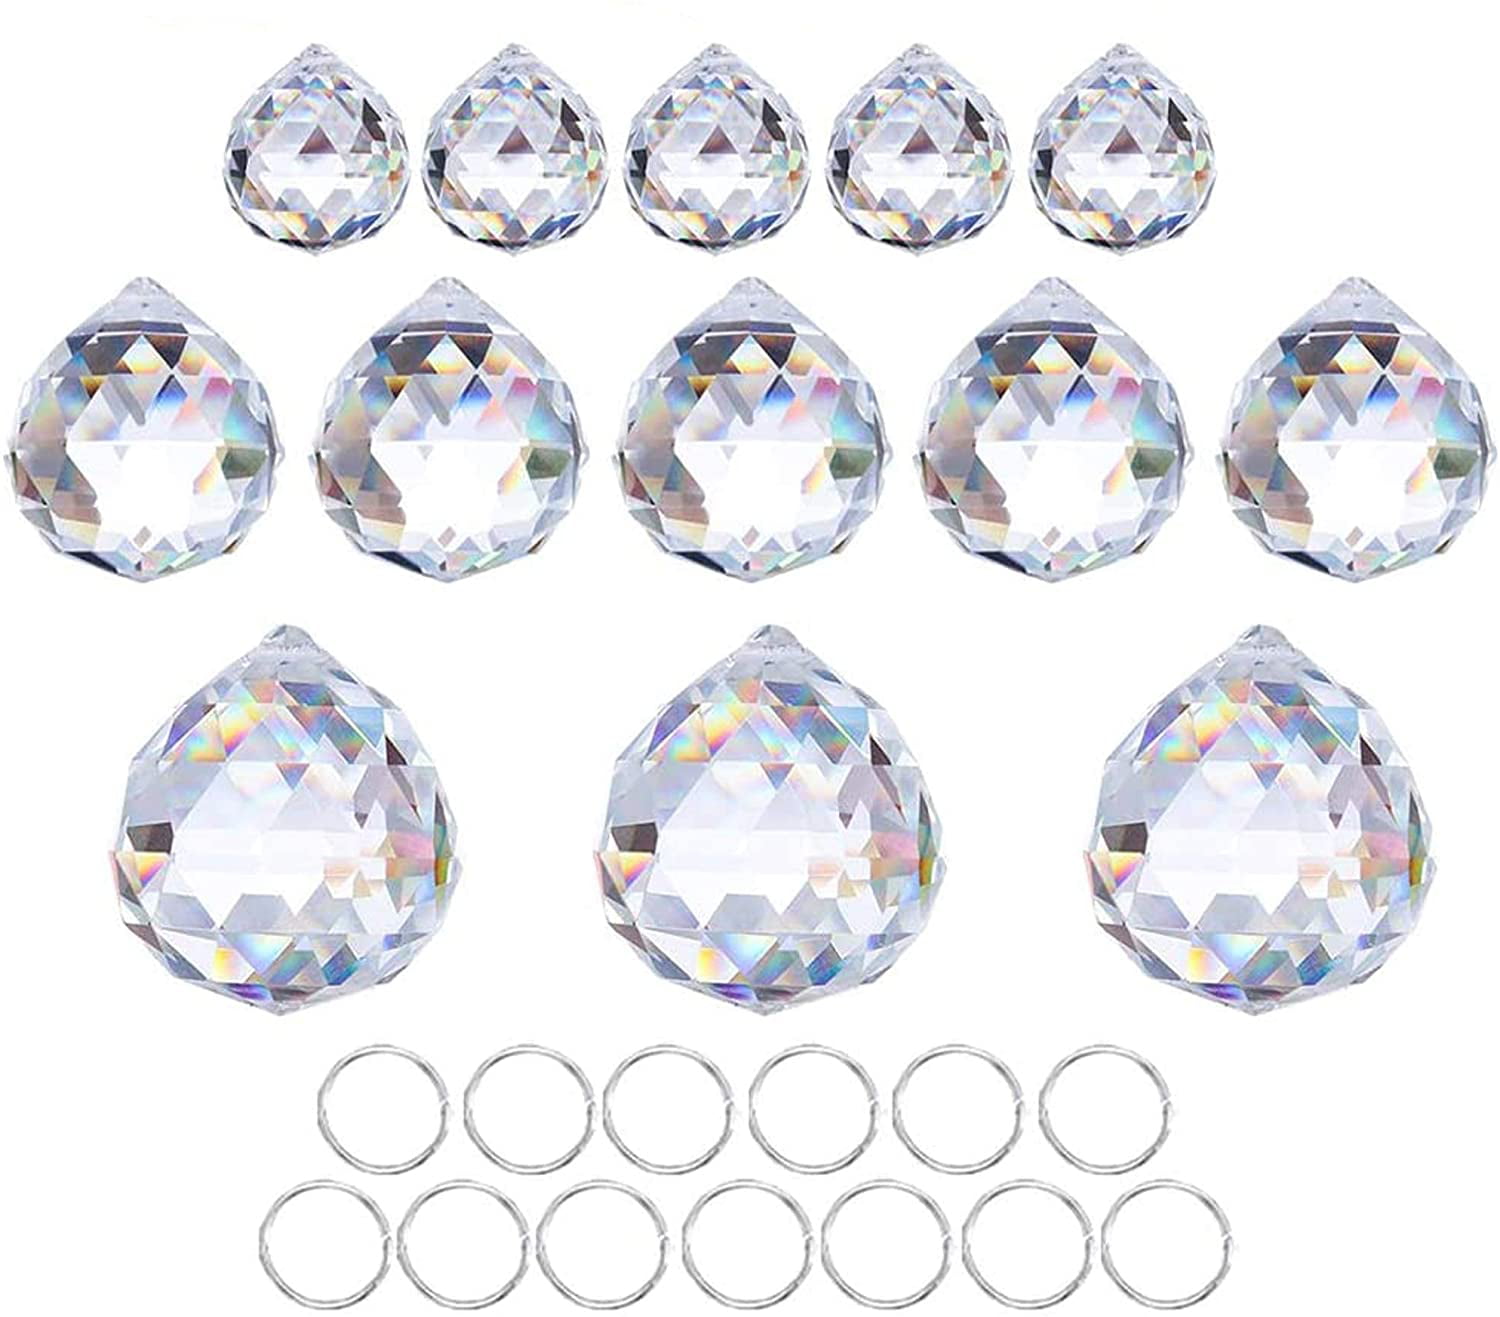 5PCS Cobalt Glass Crystal Chandelier Ball Prisms Drops Home Decor Pendant 20mm